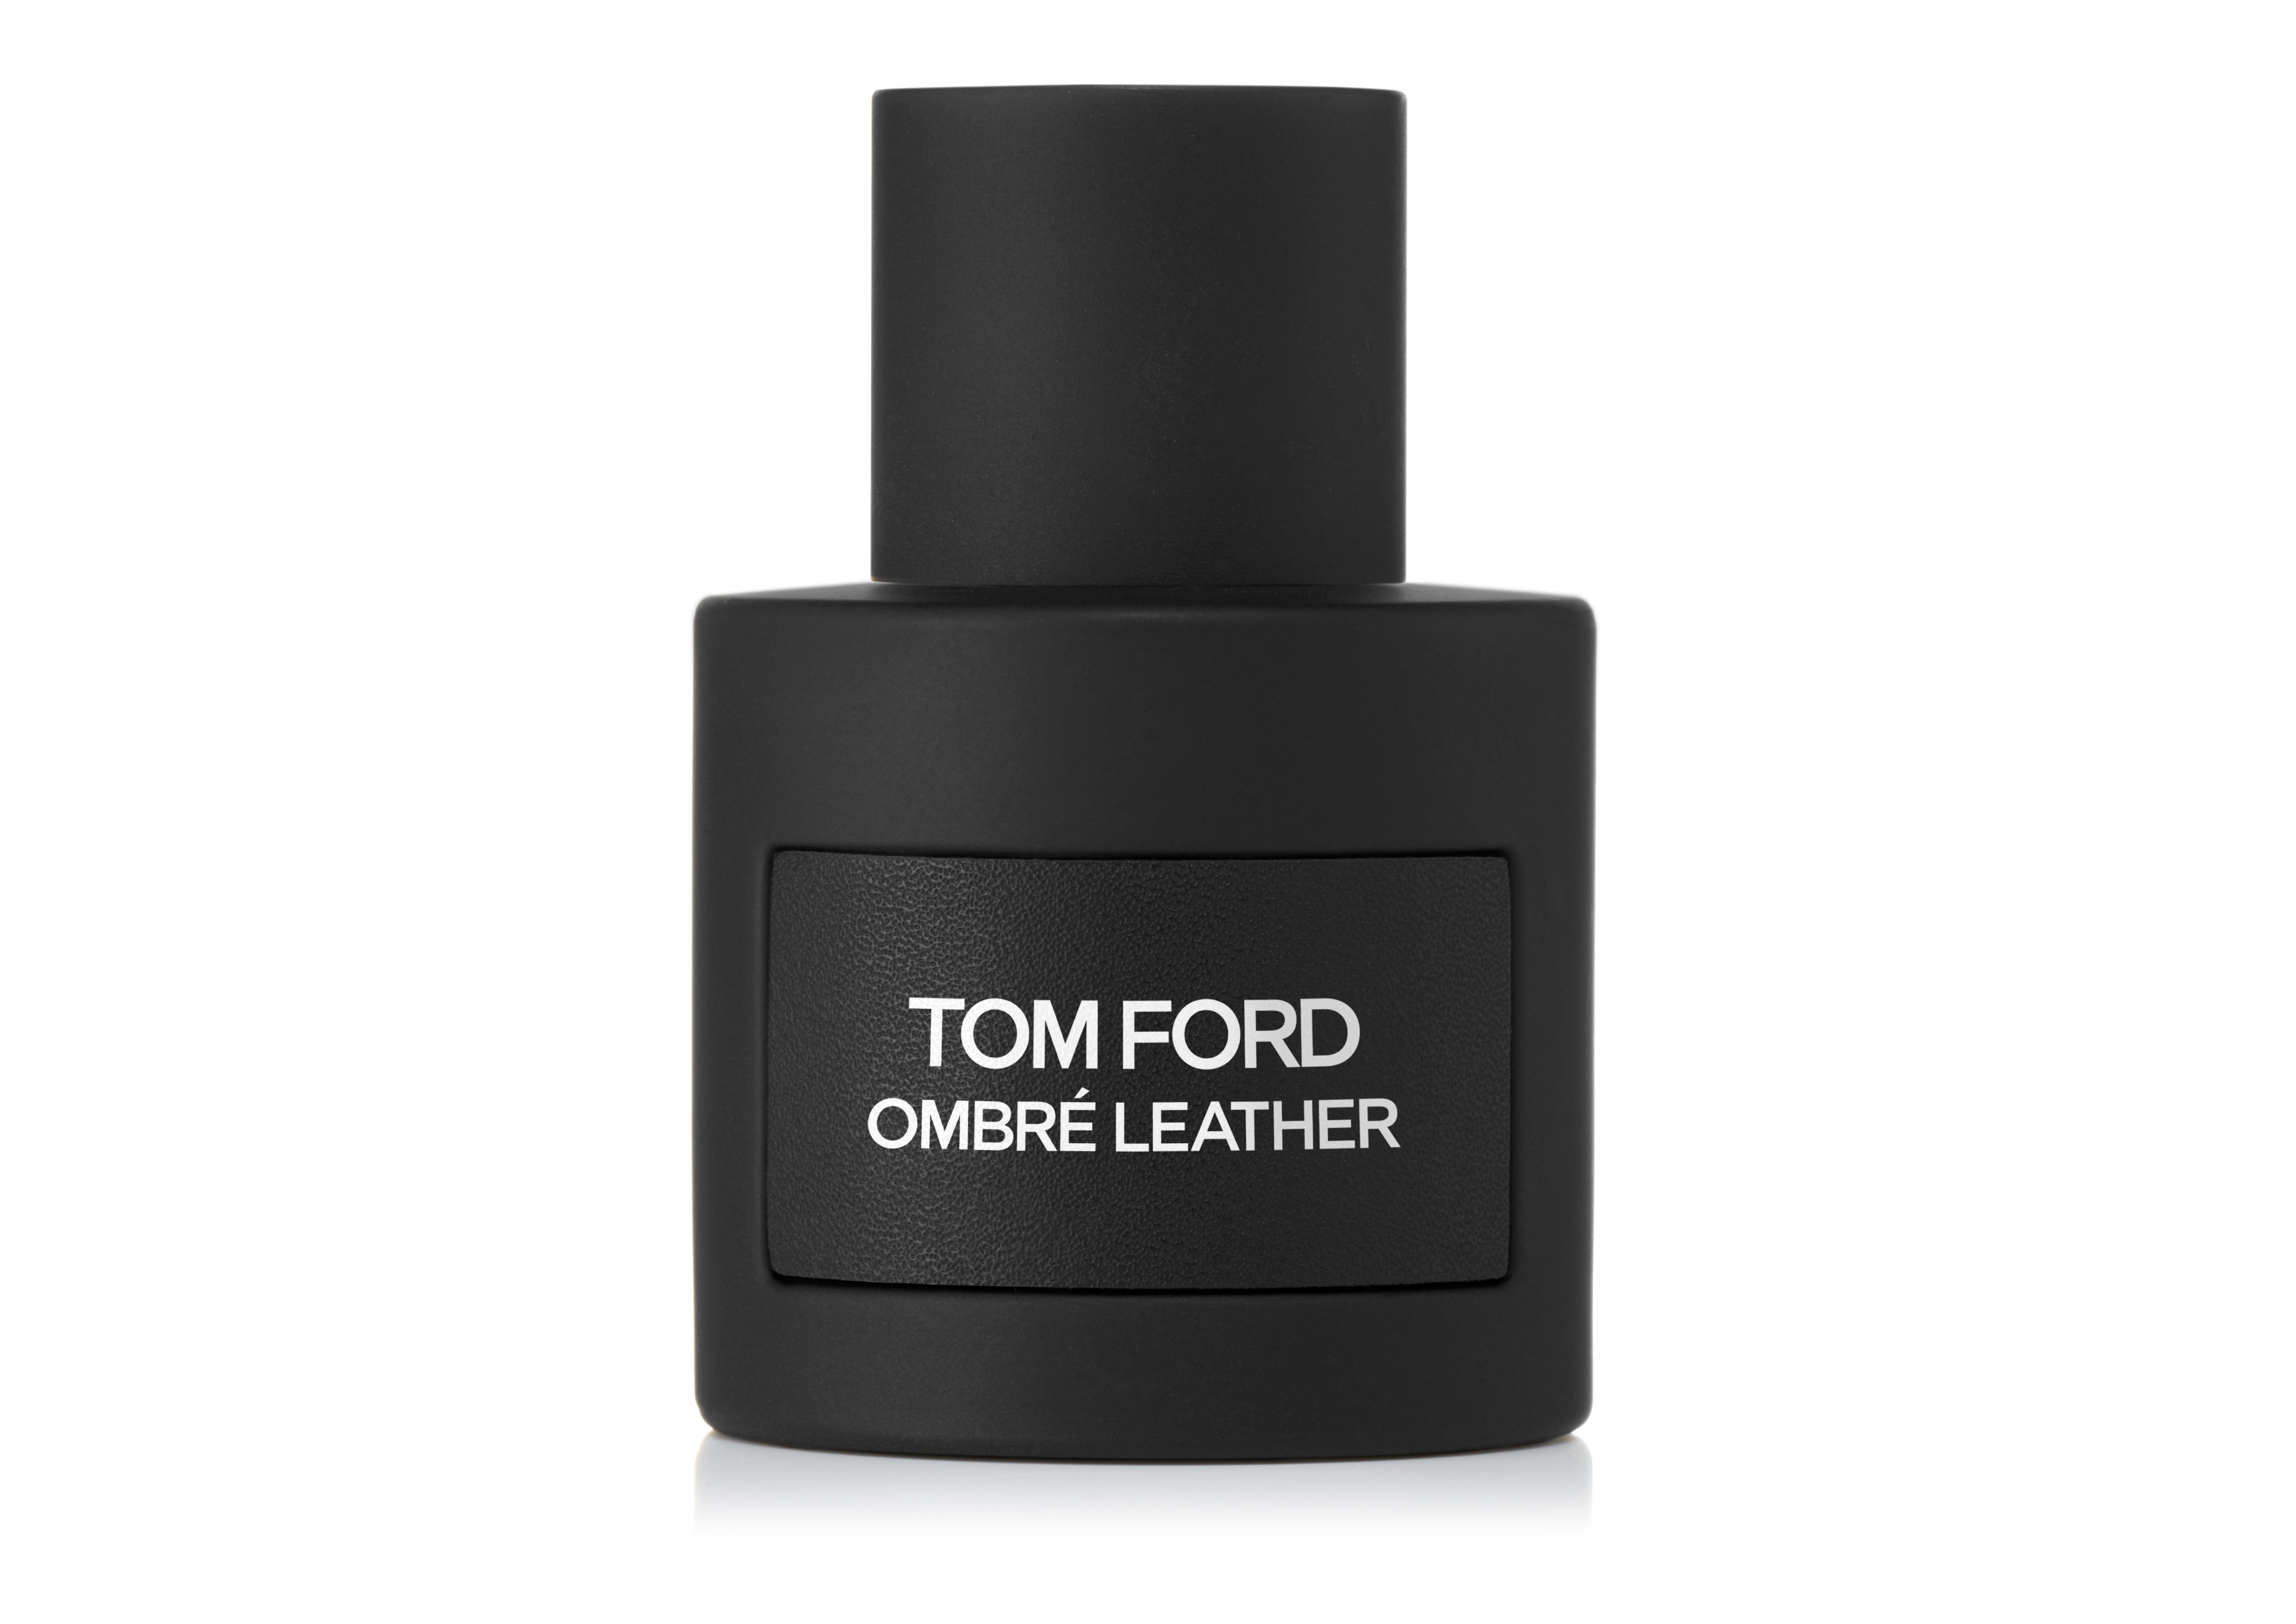 Tom Ford OMBRE LEATHER EAU DE PARFUM | TomFord.com